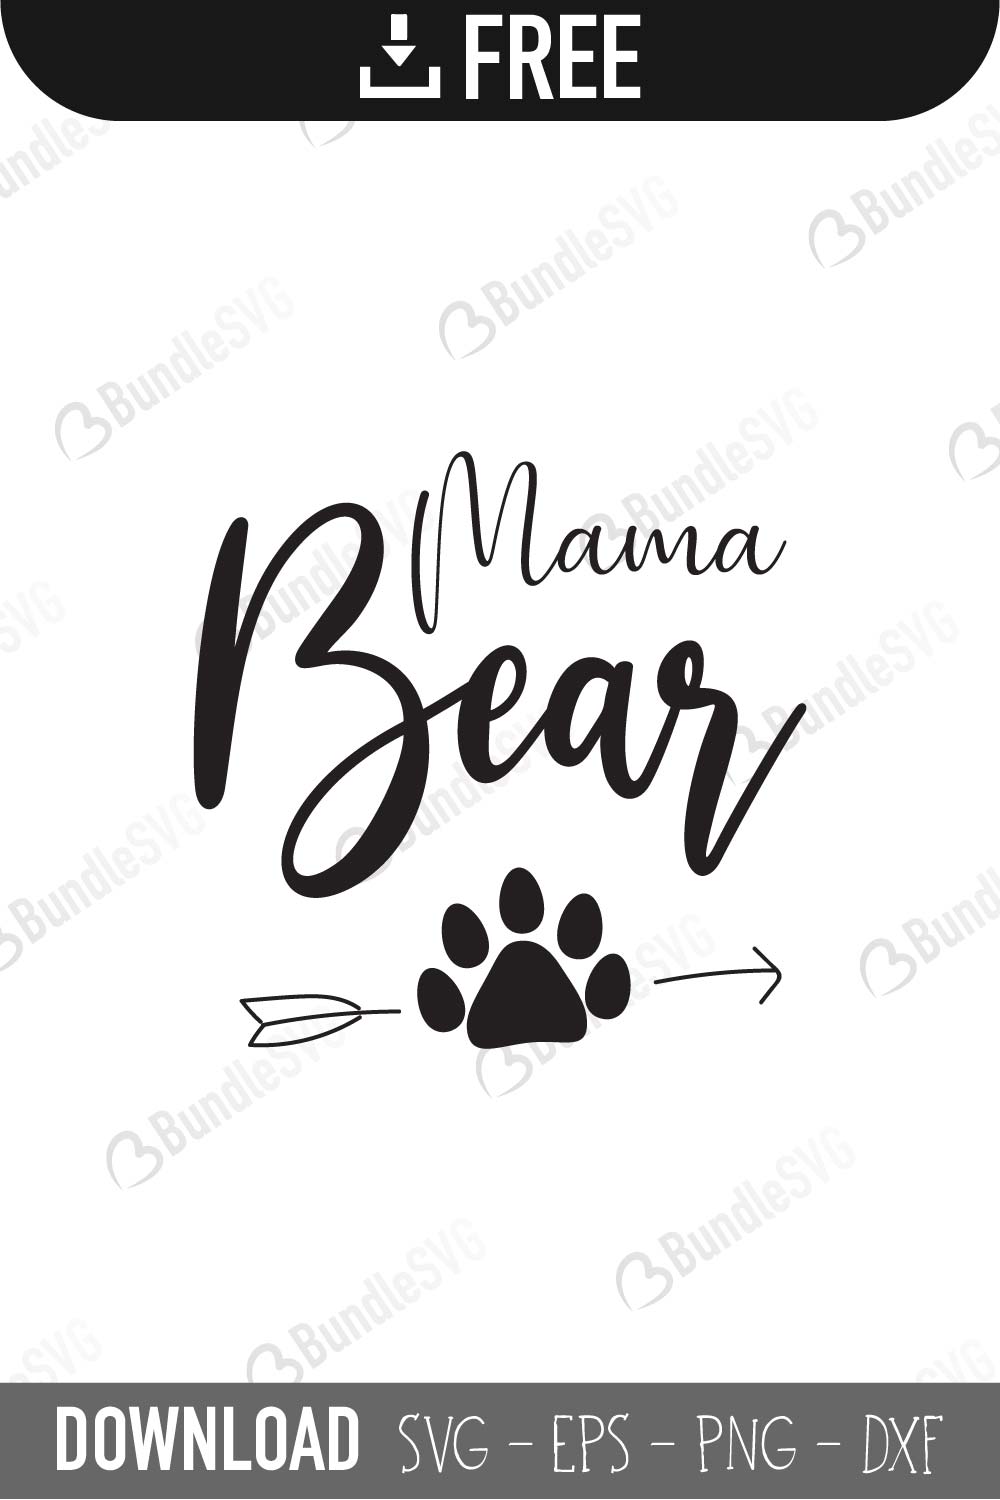 Mama Bear svg cuts scrapbook cut file cute clipart files for silhouette  cricut pazzles free svgs free svg cuts cute cut files